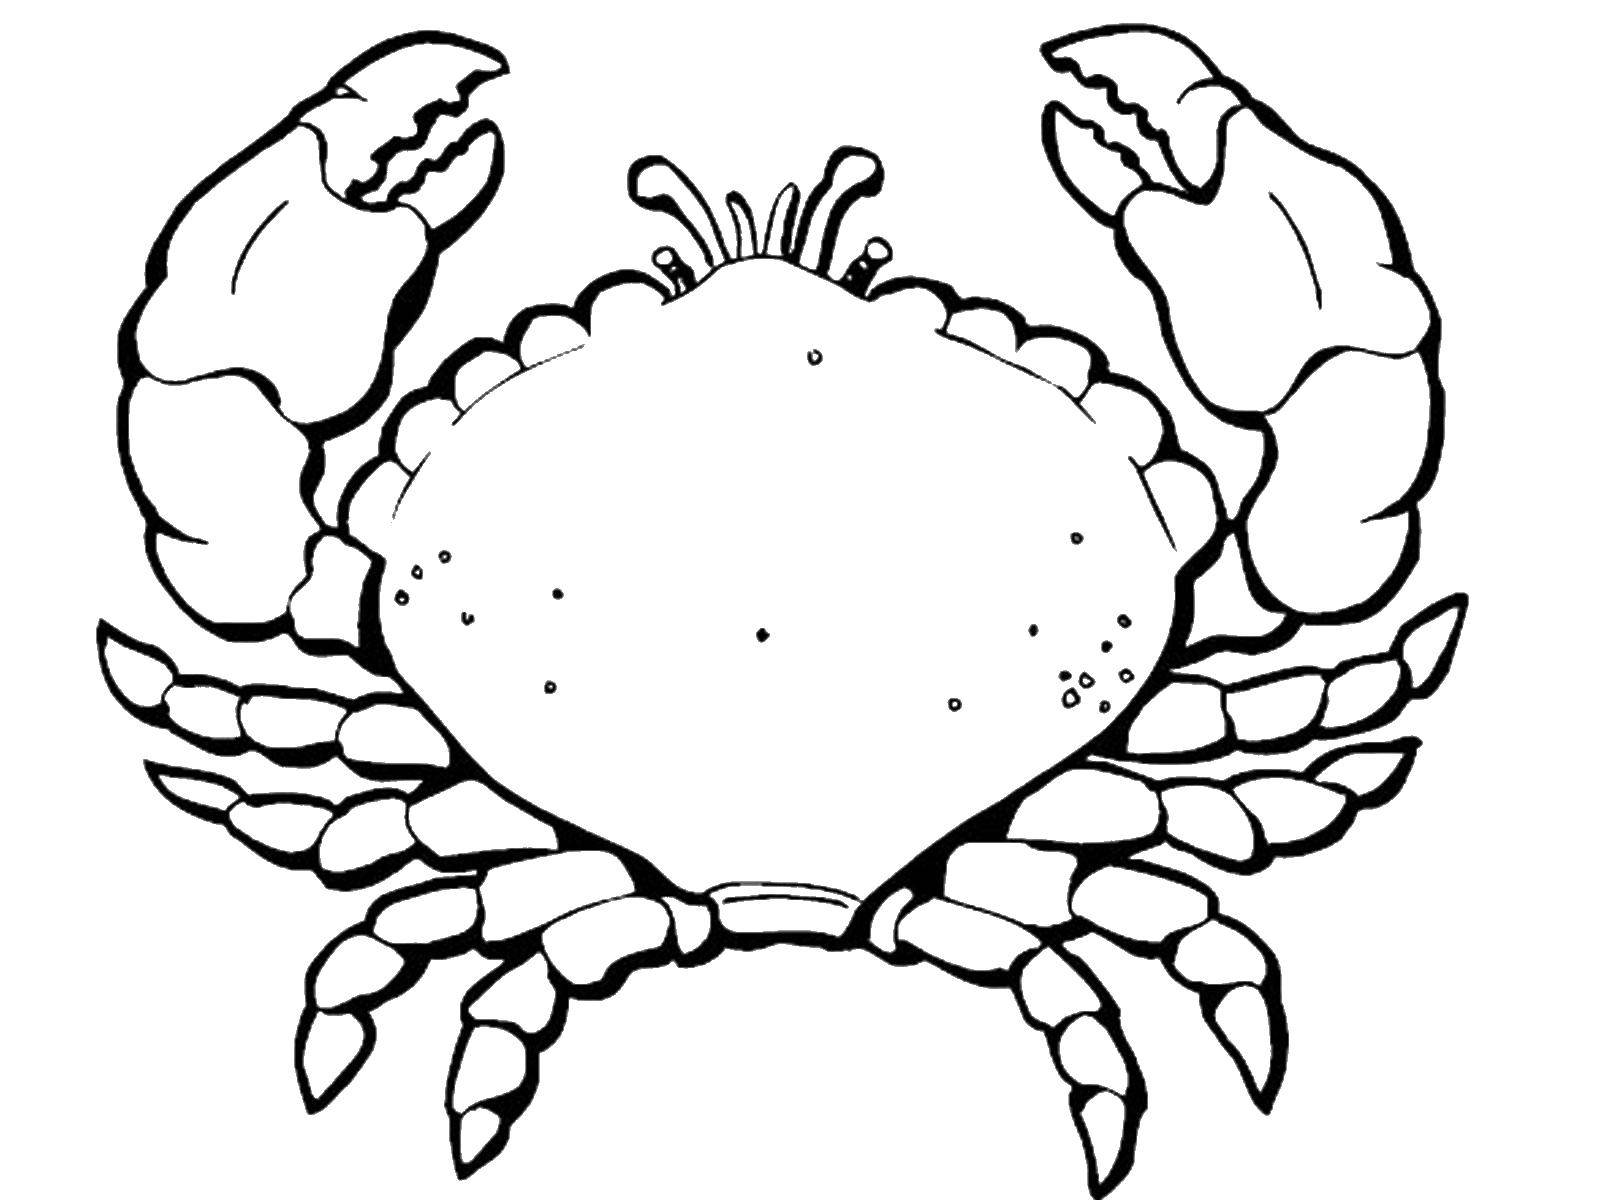 Coloring Crab. Category marine. Tags:  crab.